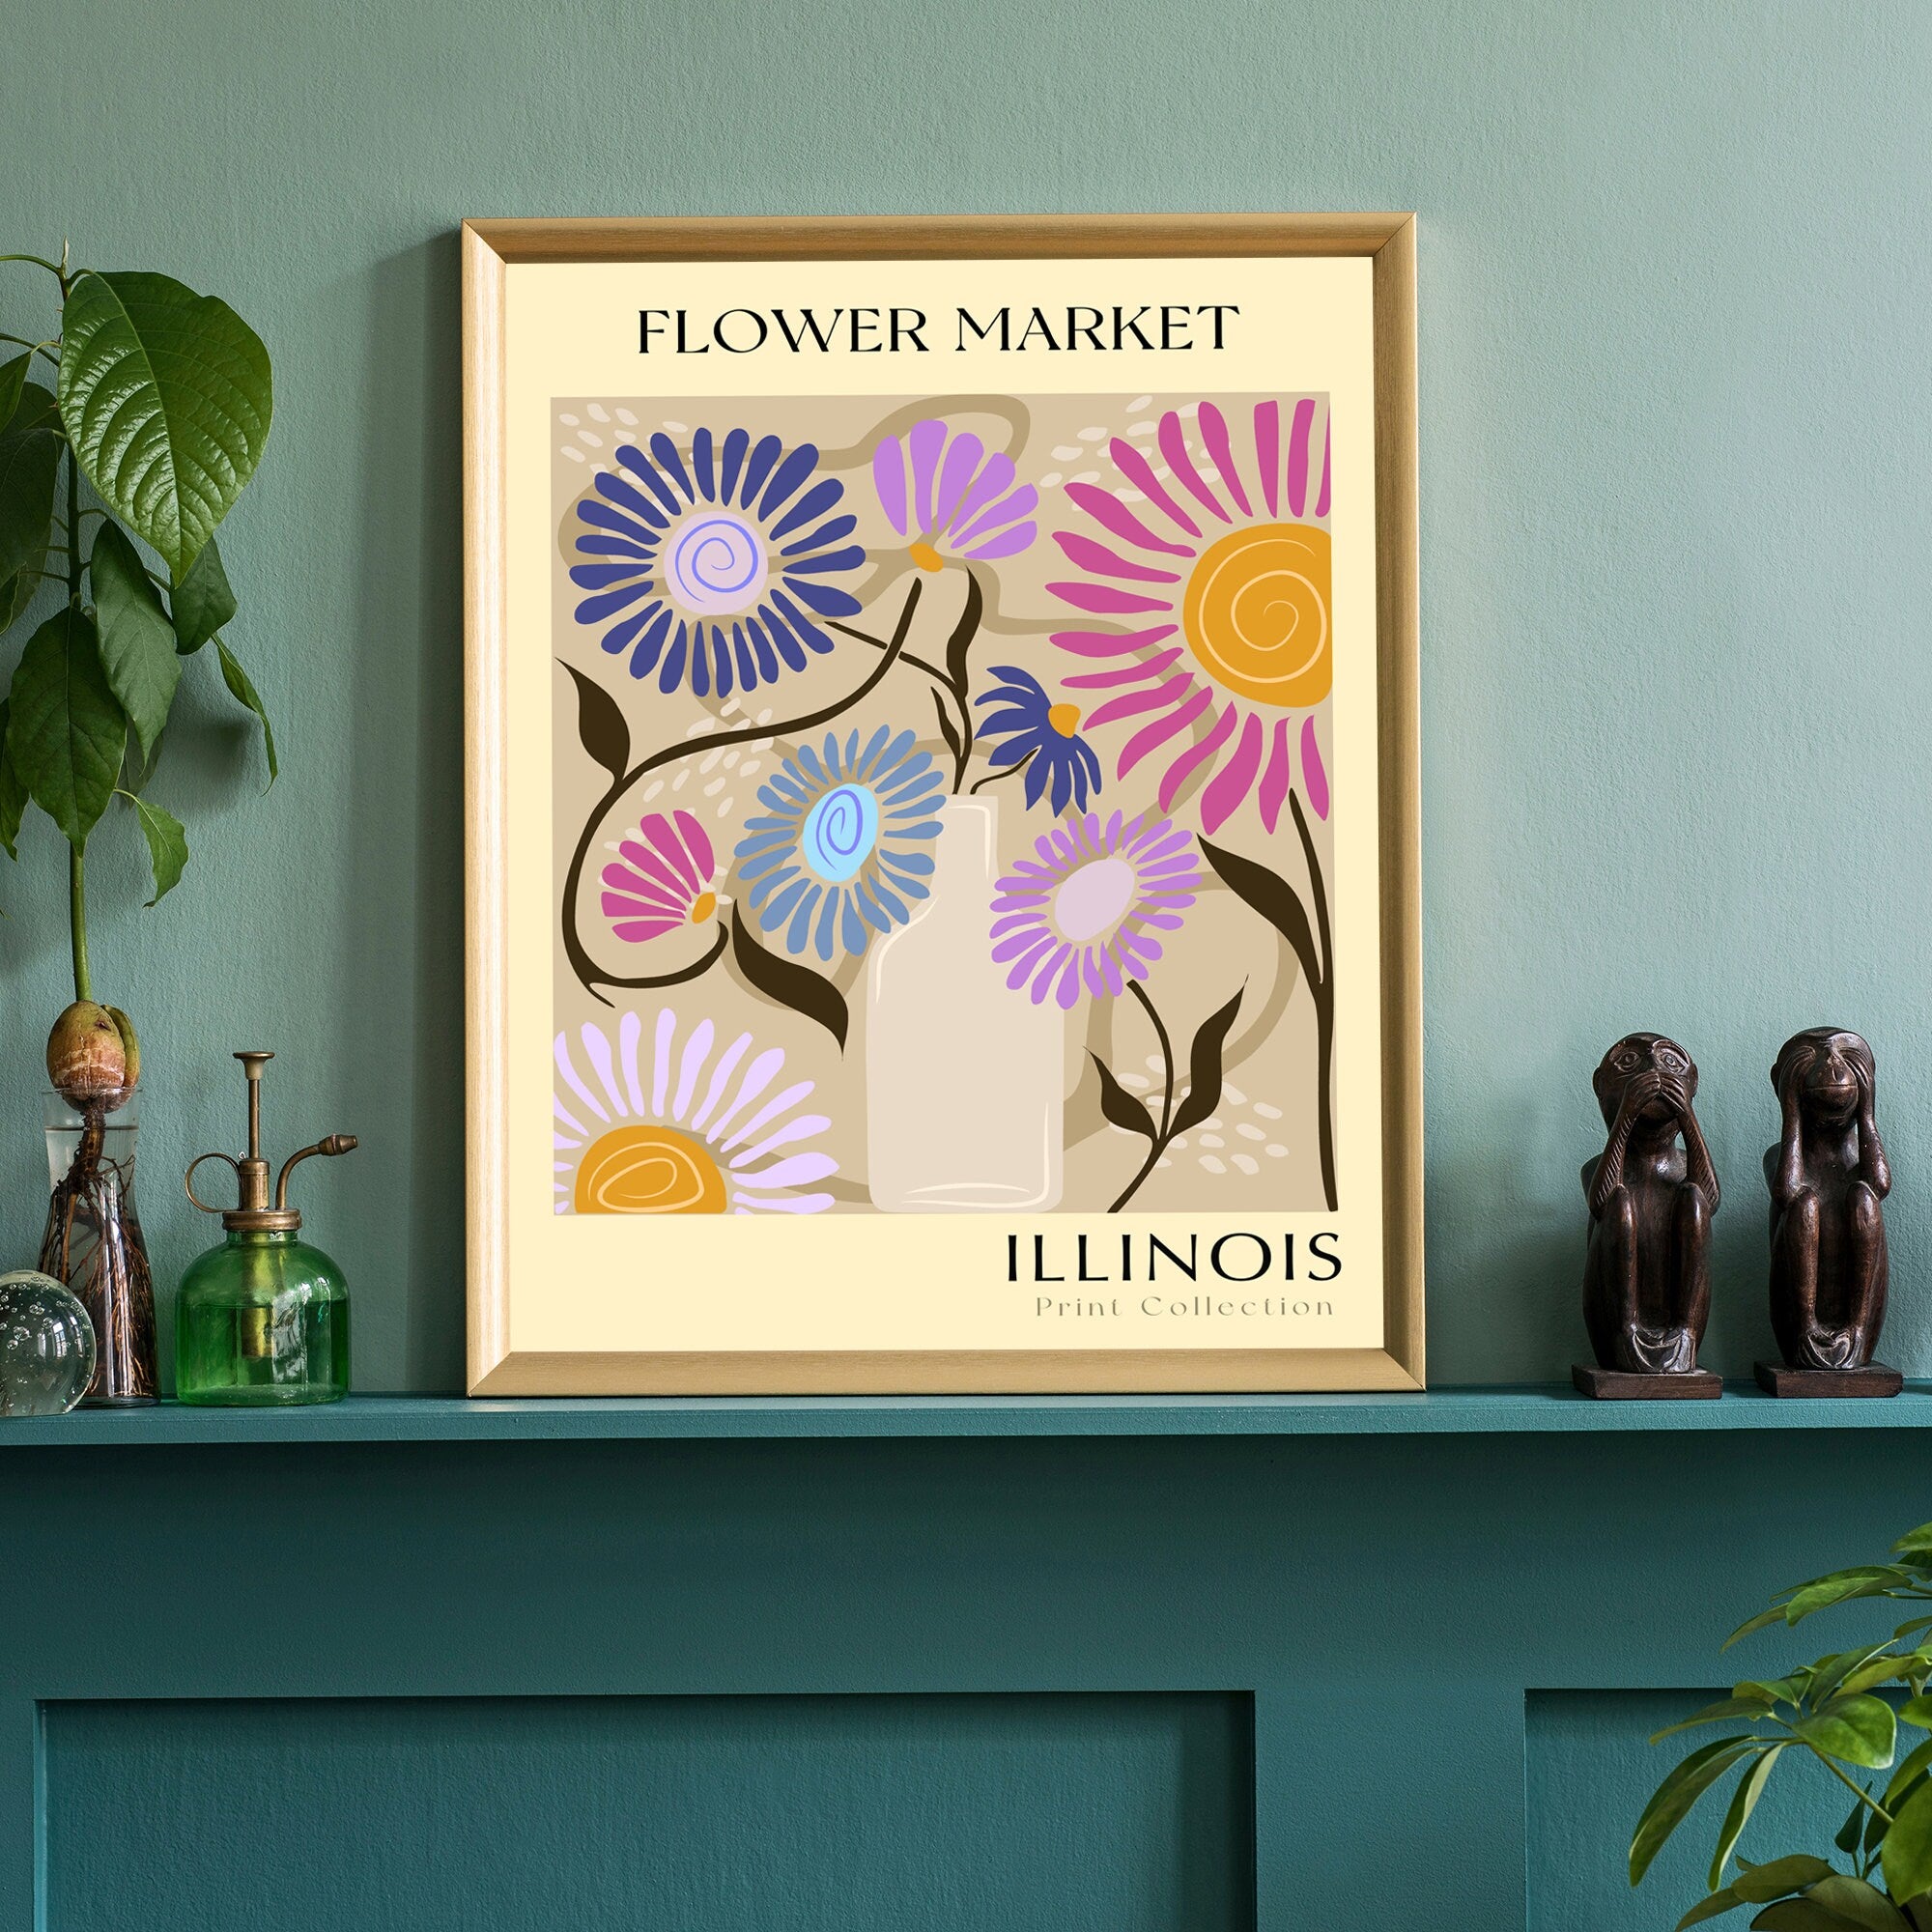 Illinois State flower print, USA states poster, Illinois flower market poster, Botanical poster, Nature poster artwork, Boho floral wall art